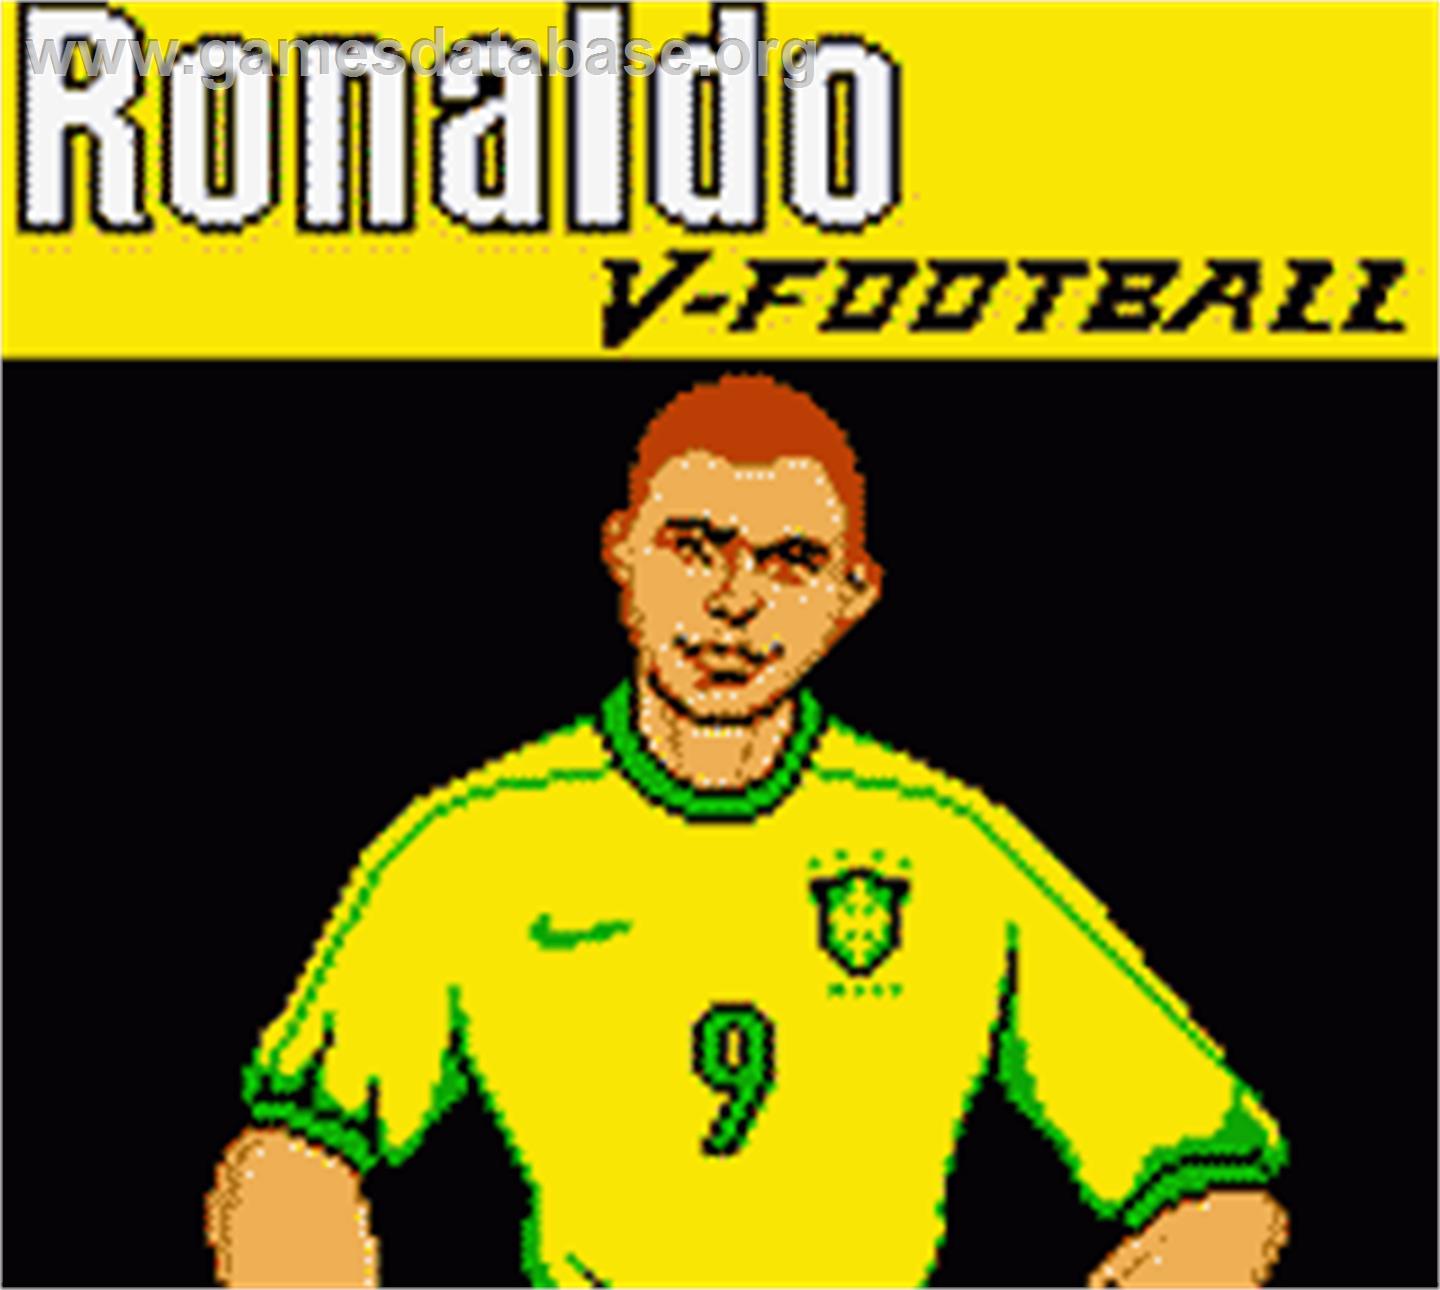 Ronaldo V-Football - Nintendo Game Boy Color - Artwork - Title Screen